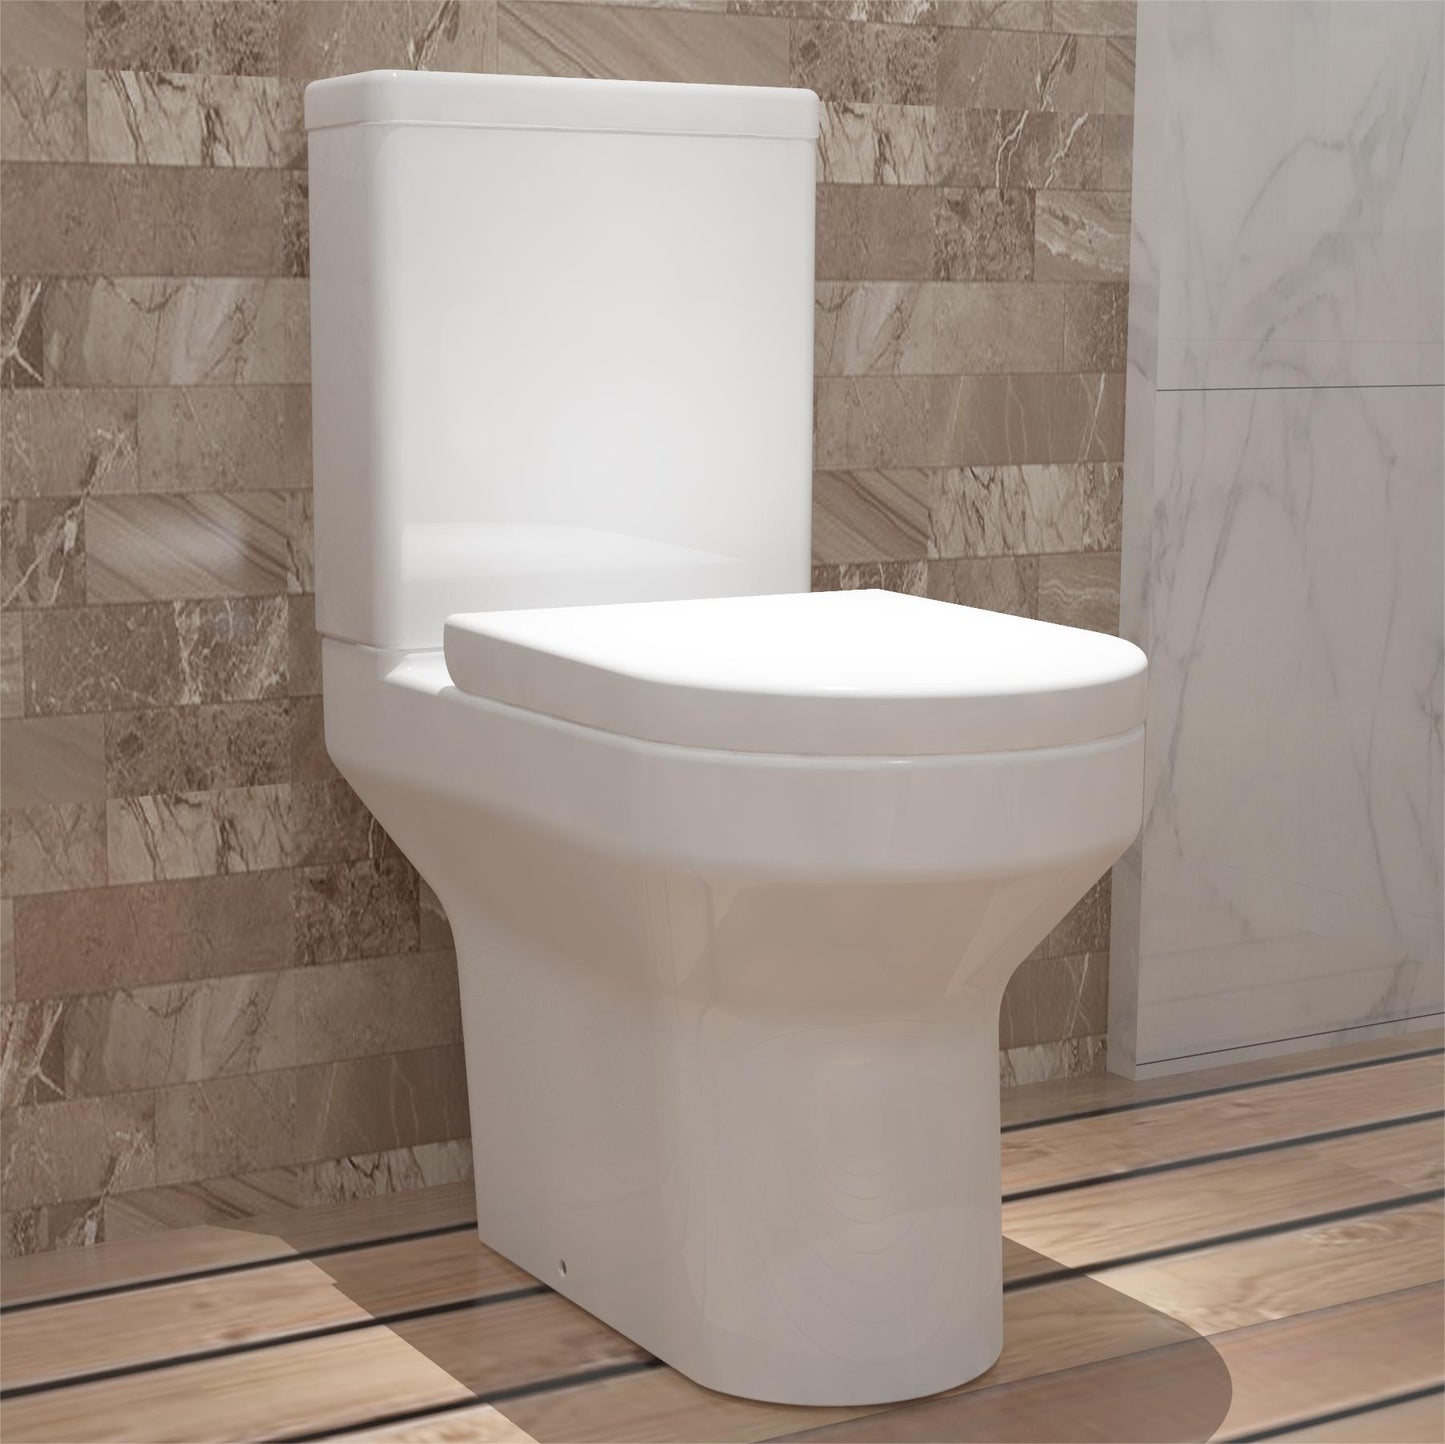 Aica-close-coupled-toilet-032.jpg